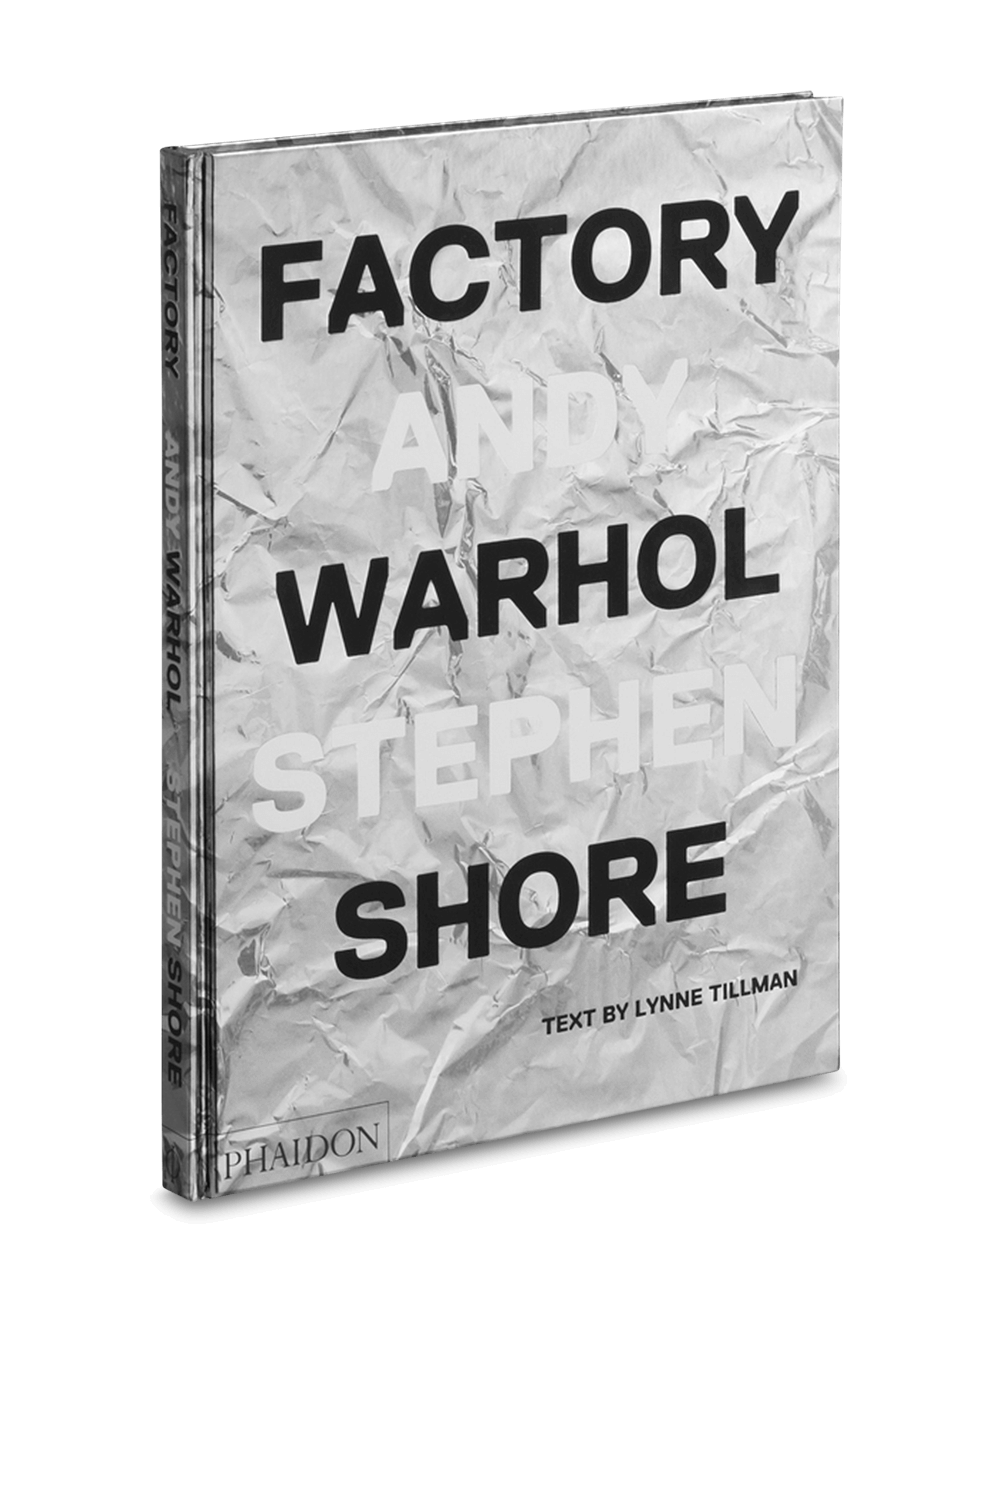 Factory Andy Warhol PHAIDON